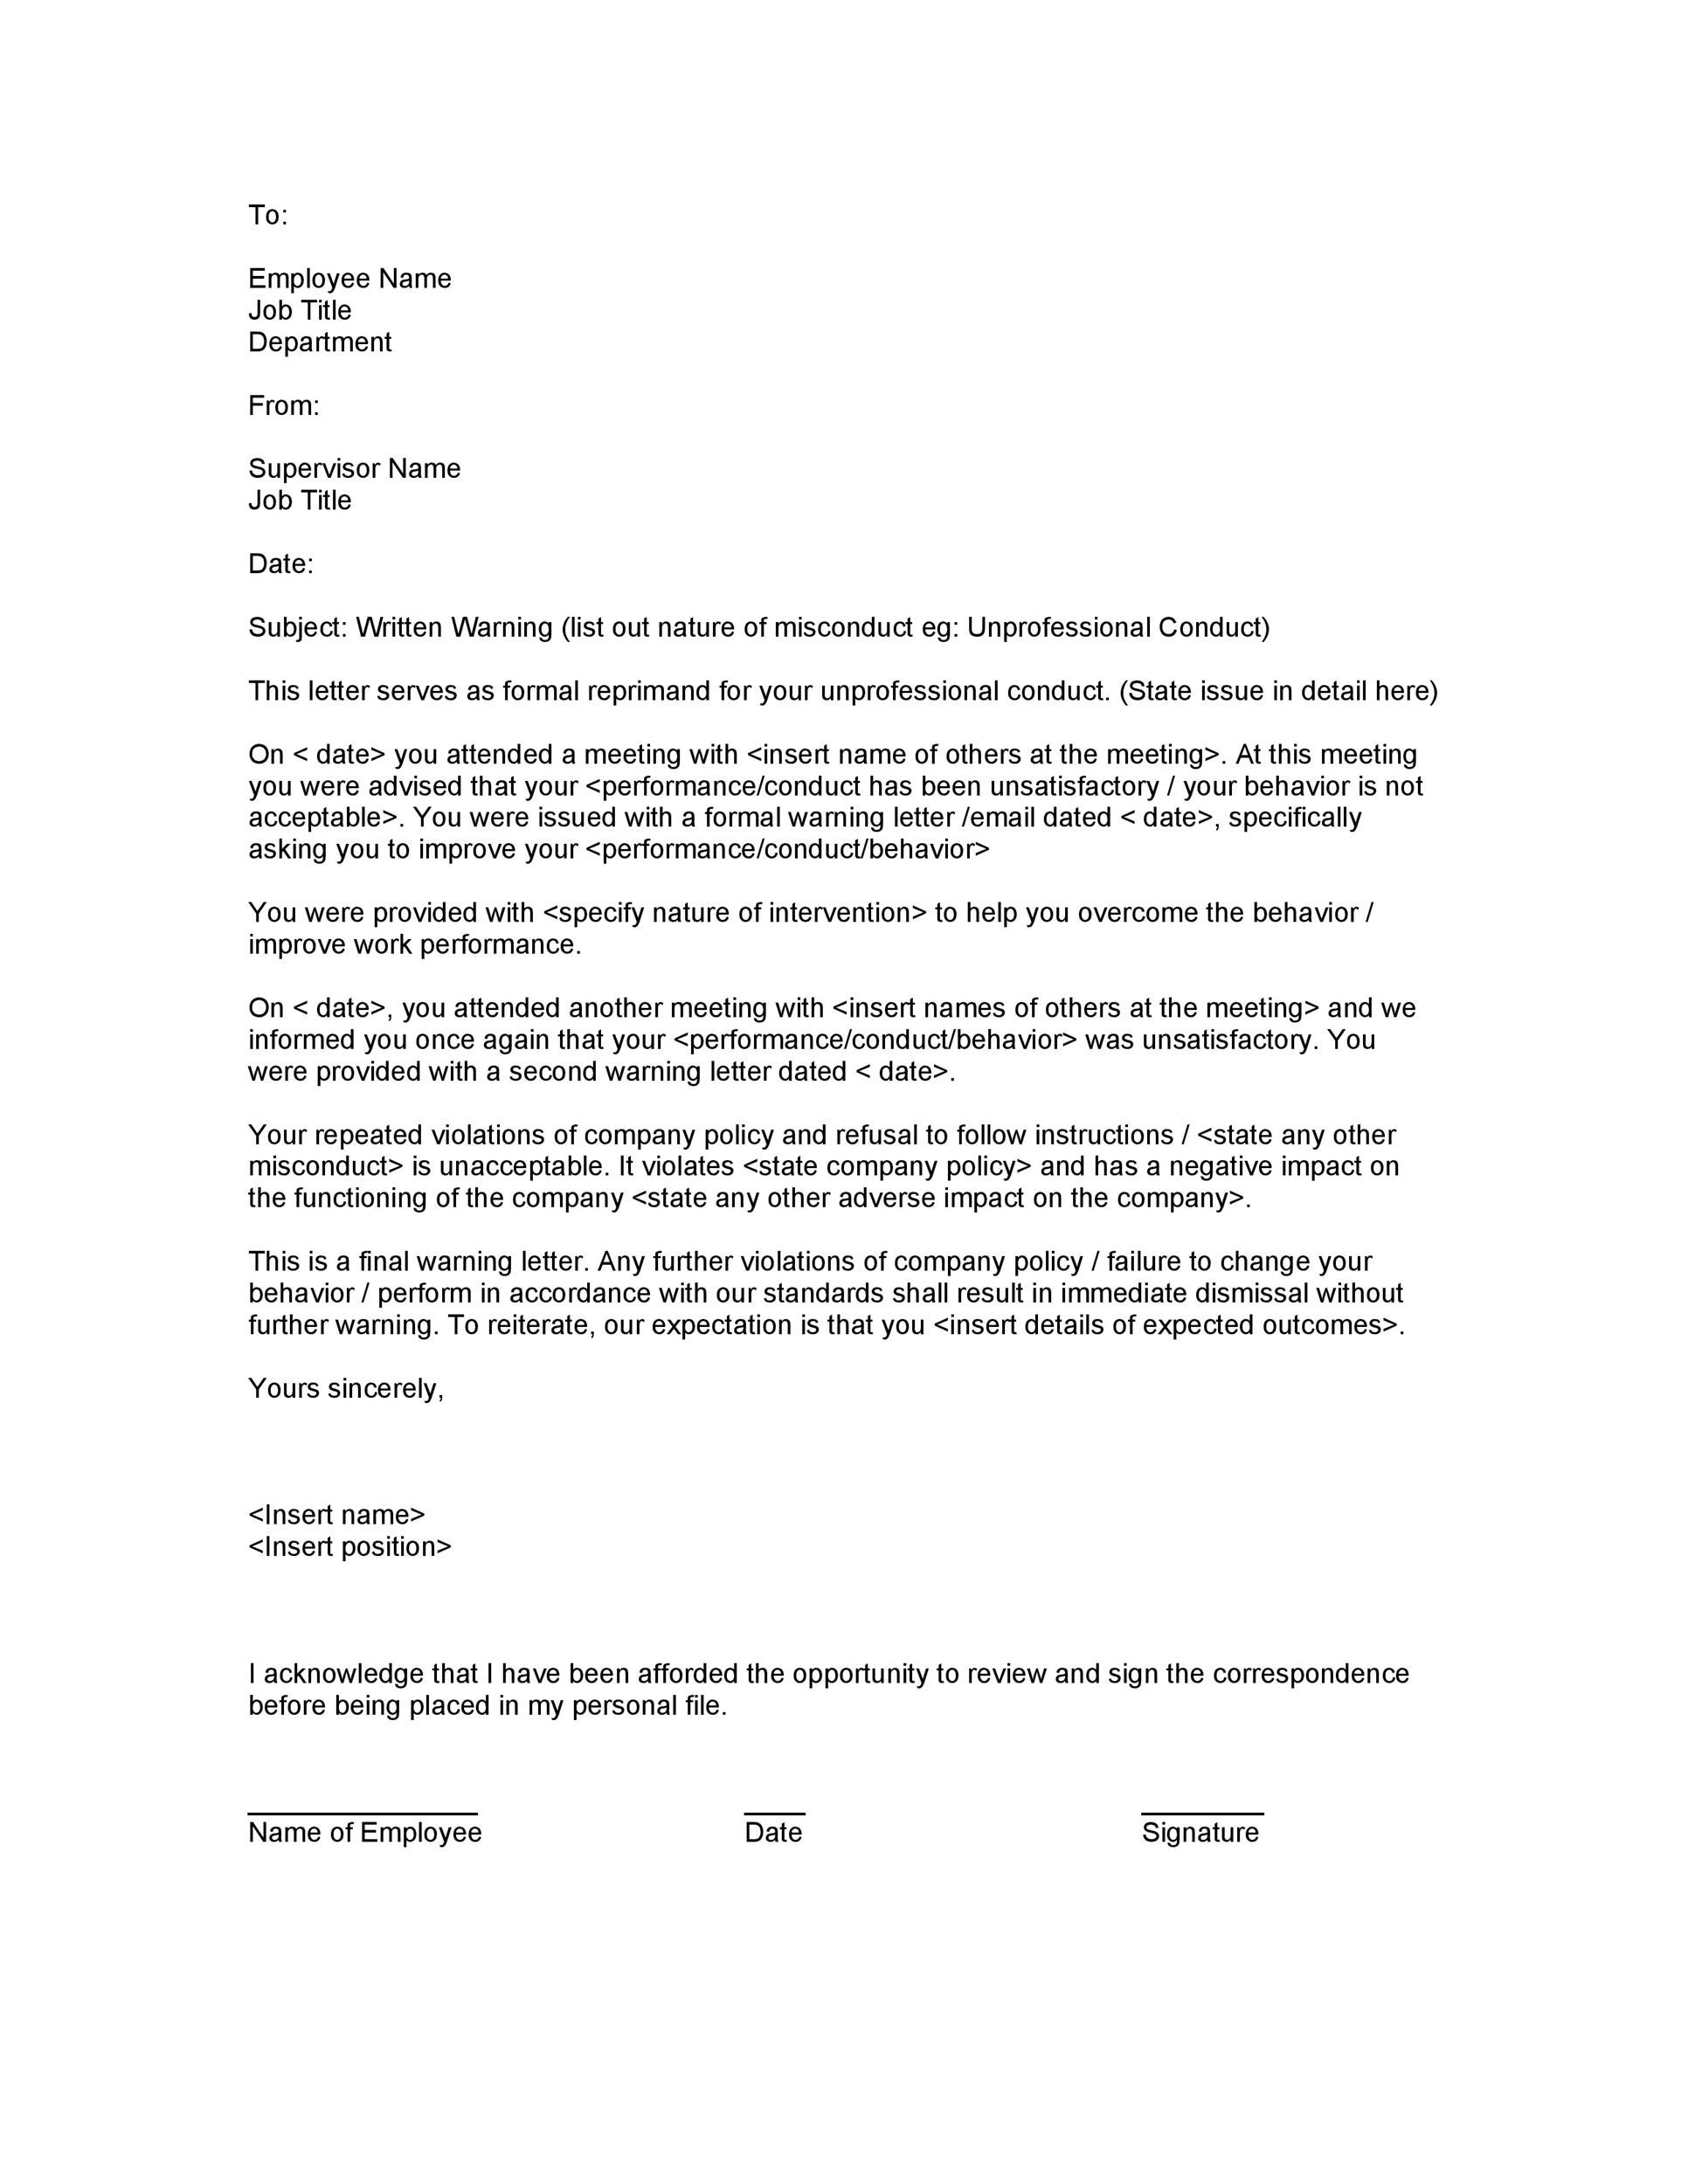 Written Warning Letter To Employee Template